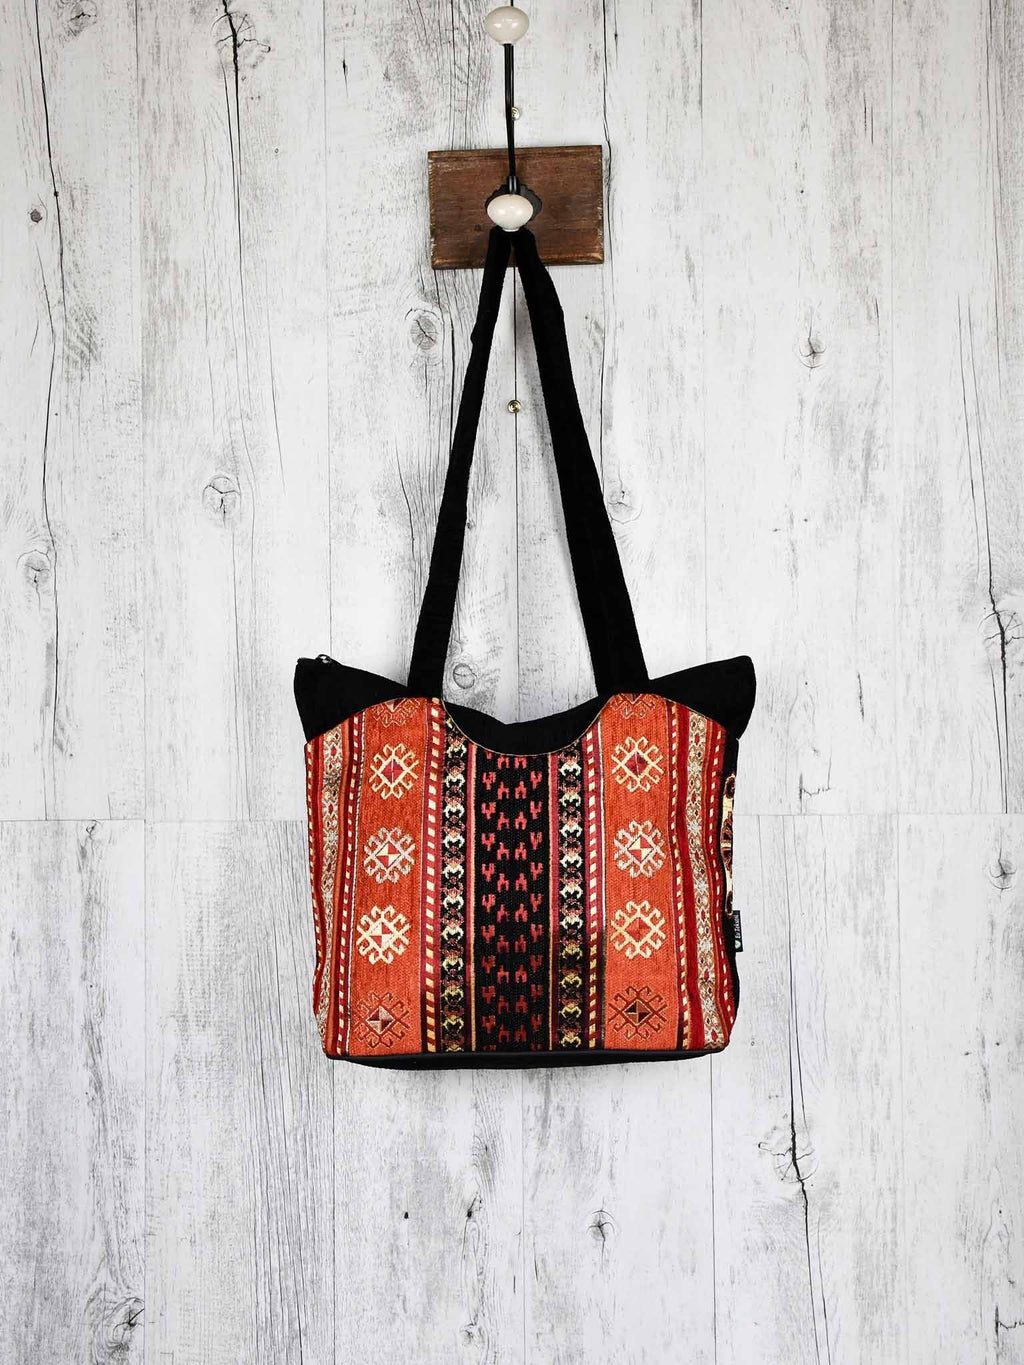 Turkish Handbag Tote Aztec Black Rusty Textile Sydney Grand Bazaar 